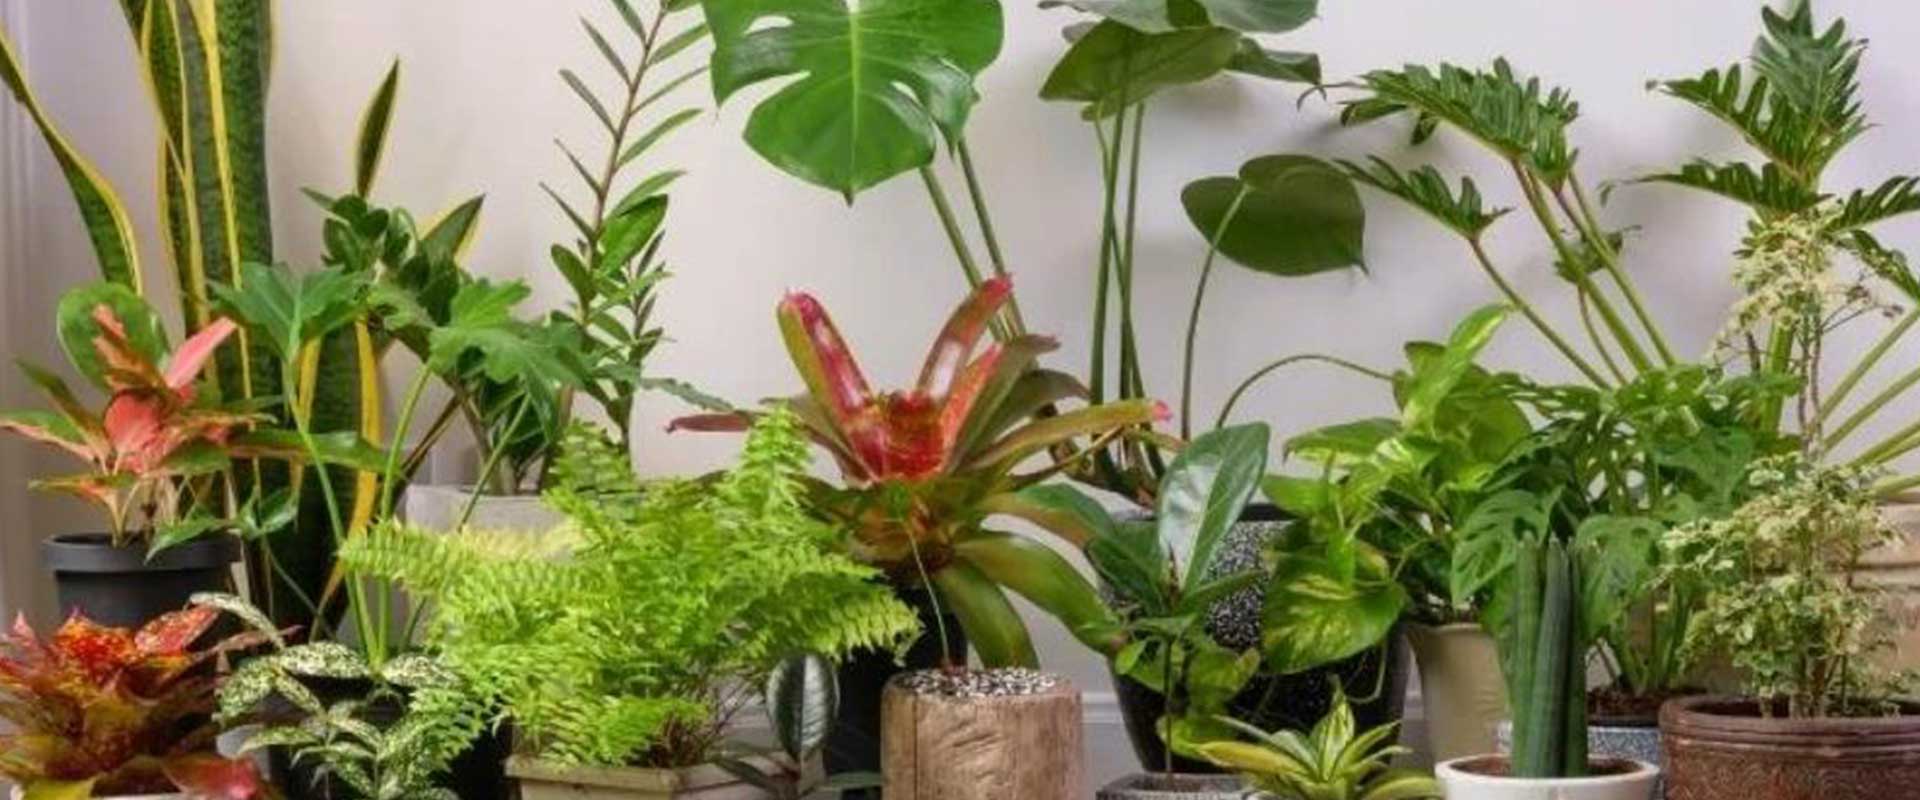 Feton LED Grow Light for Tropical Plant